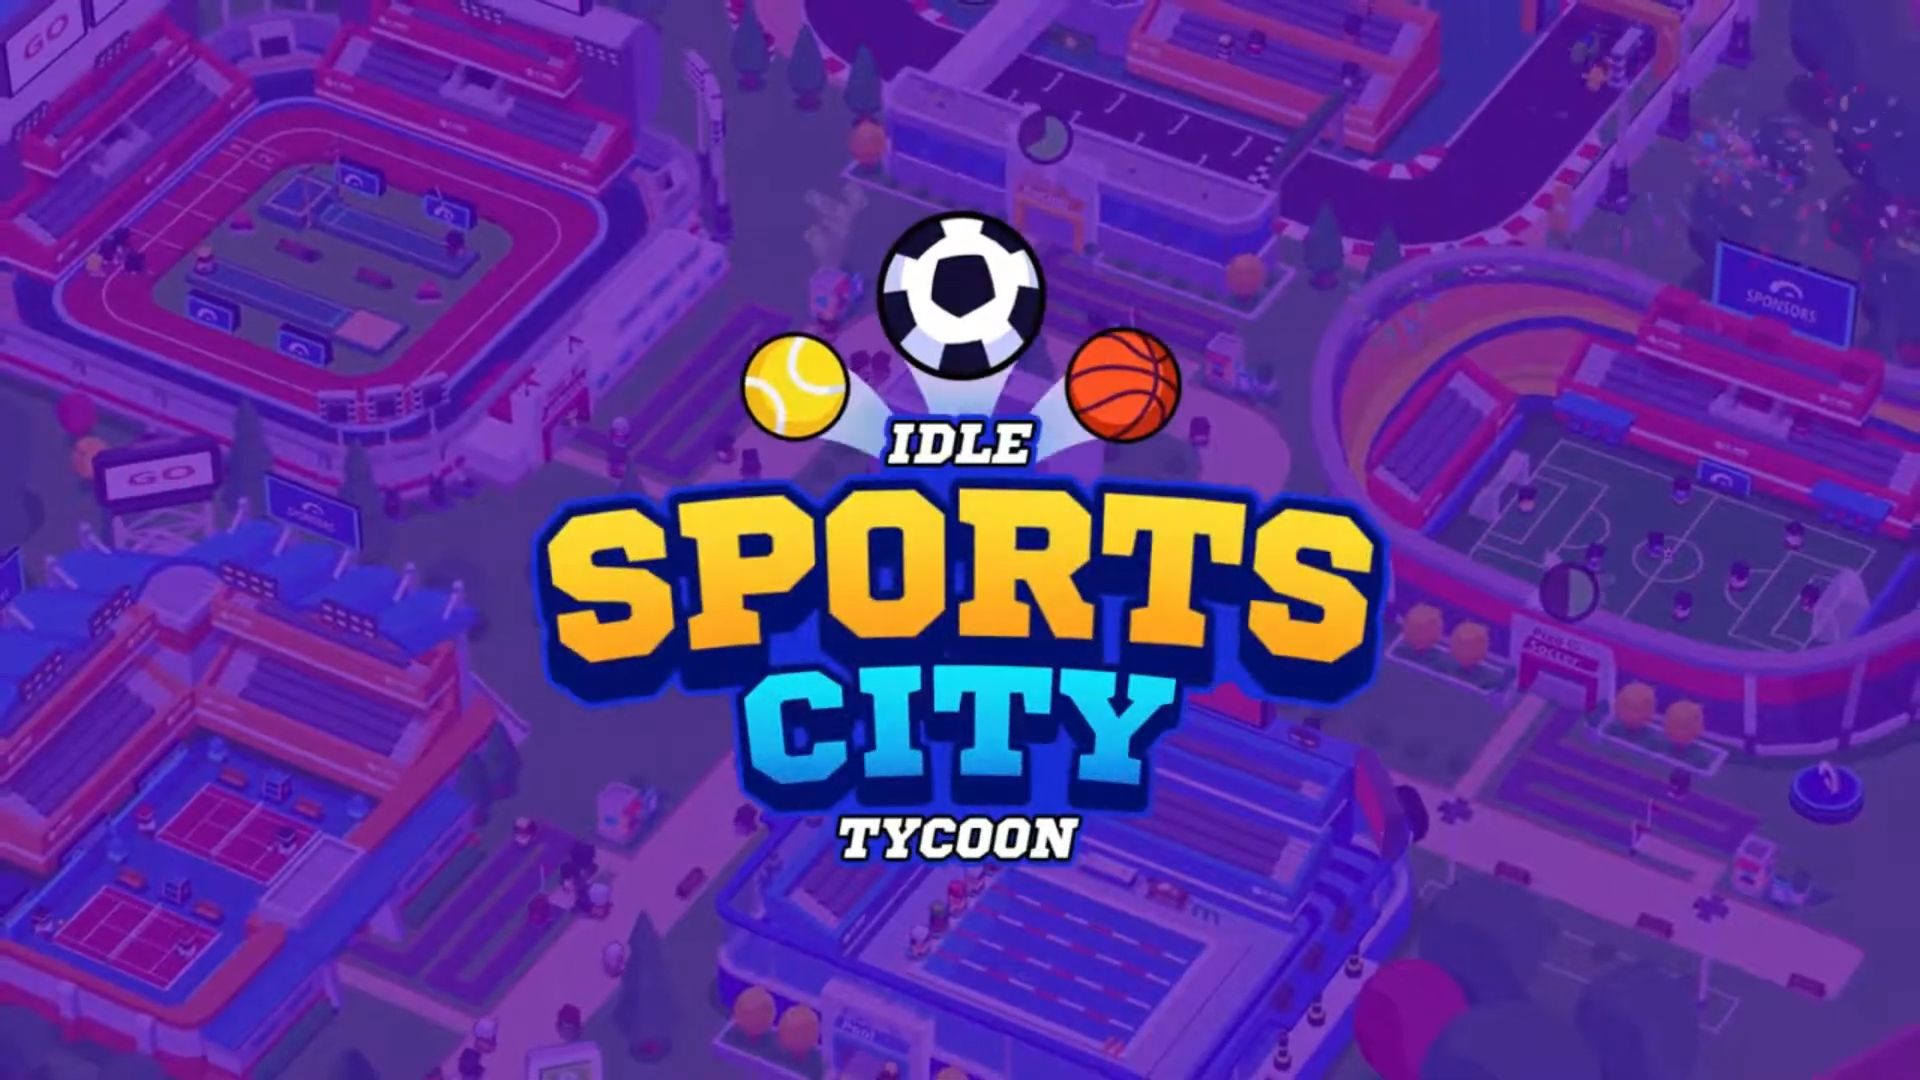 Sports City Tycoon - Idle Sports Games Simulator captura de pantalla 1